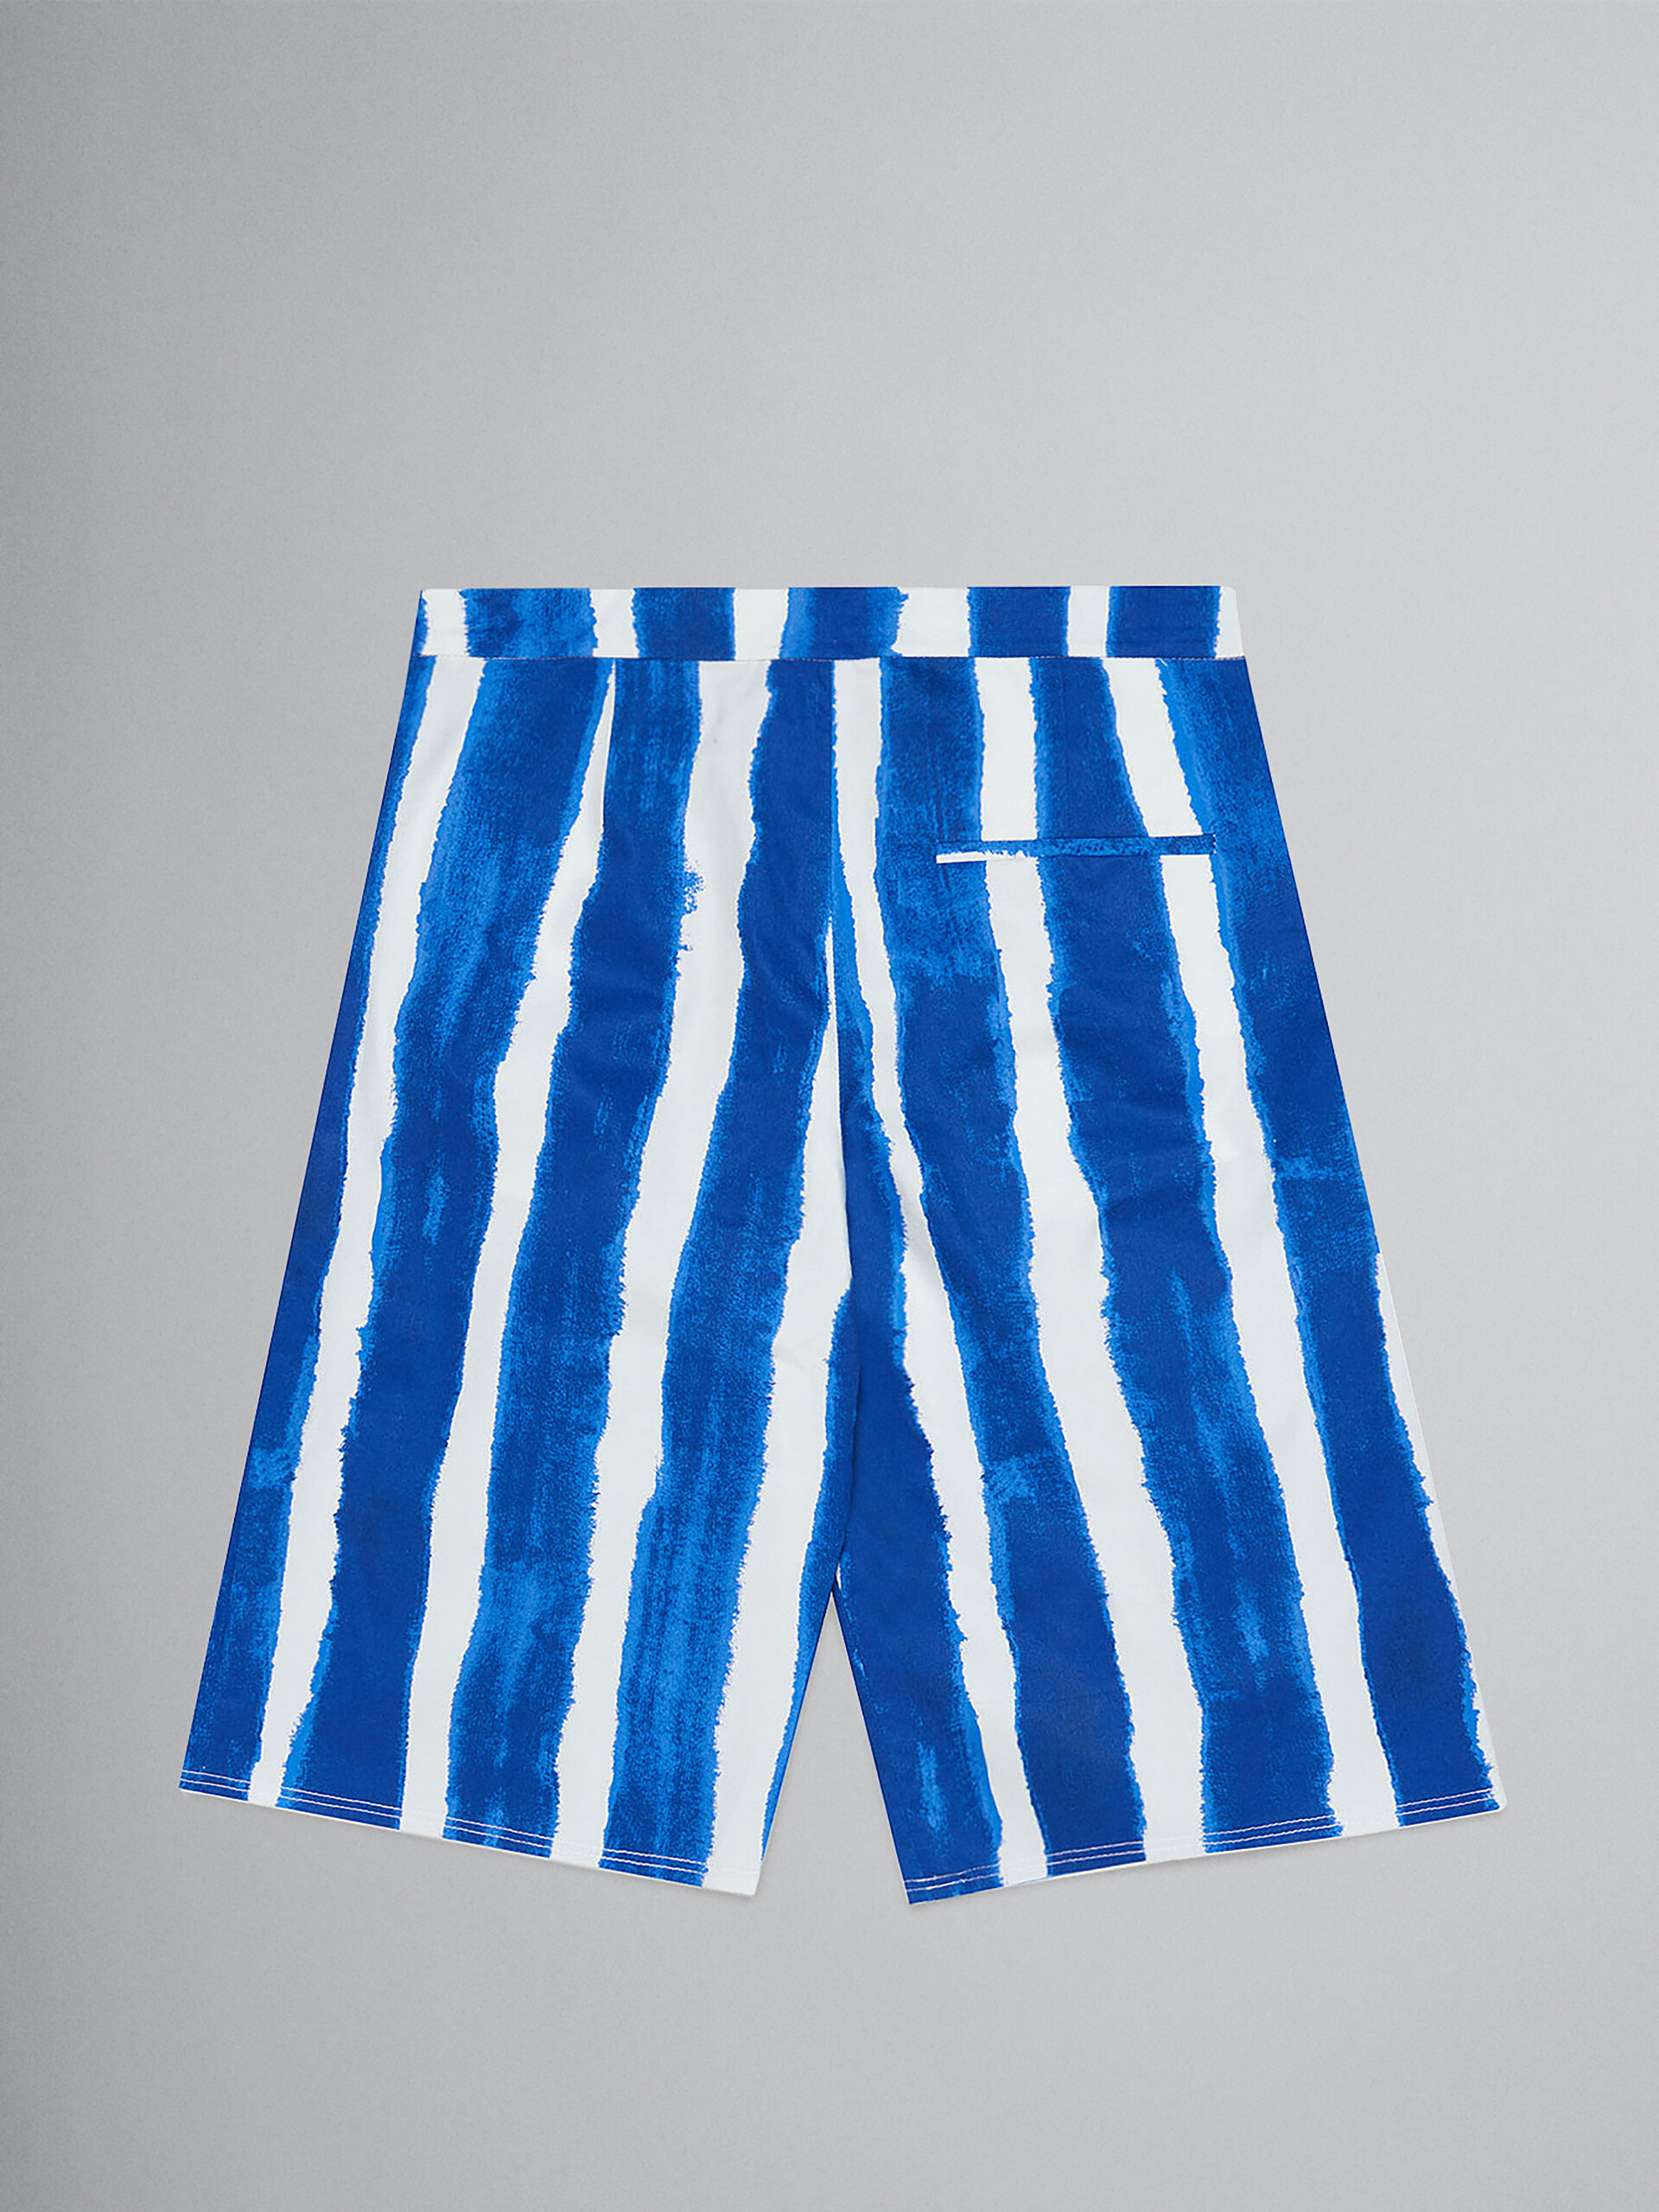 Pantalón corto azul de gabardina con motivo de rayas en toda la superficie - Pantalones - Image 2